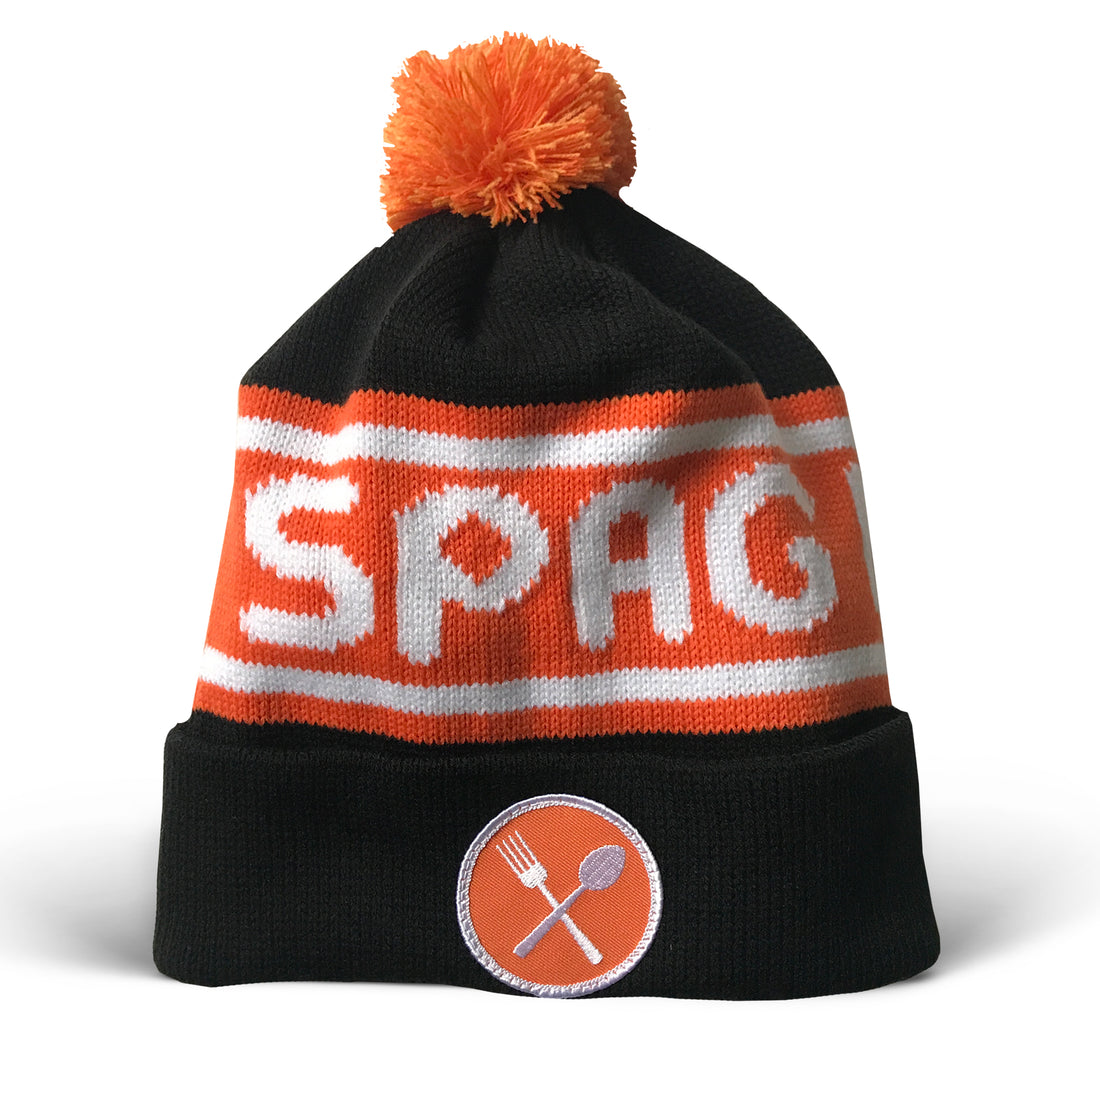 Spag Heddy - Custom Knit Pom Pom Hat